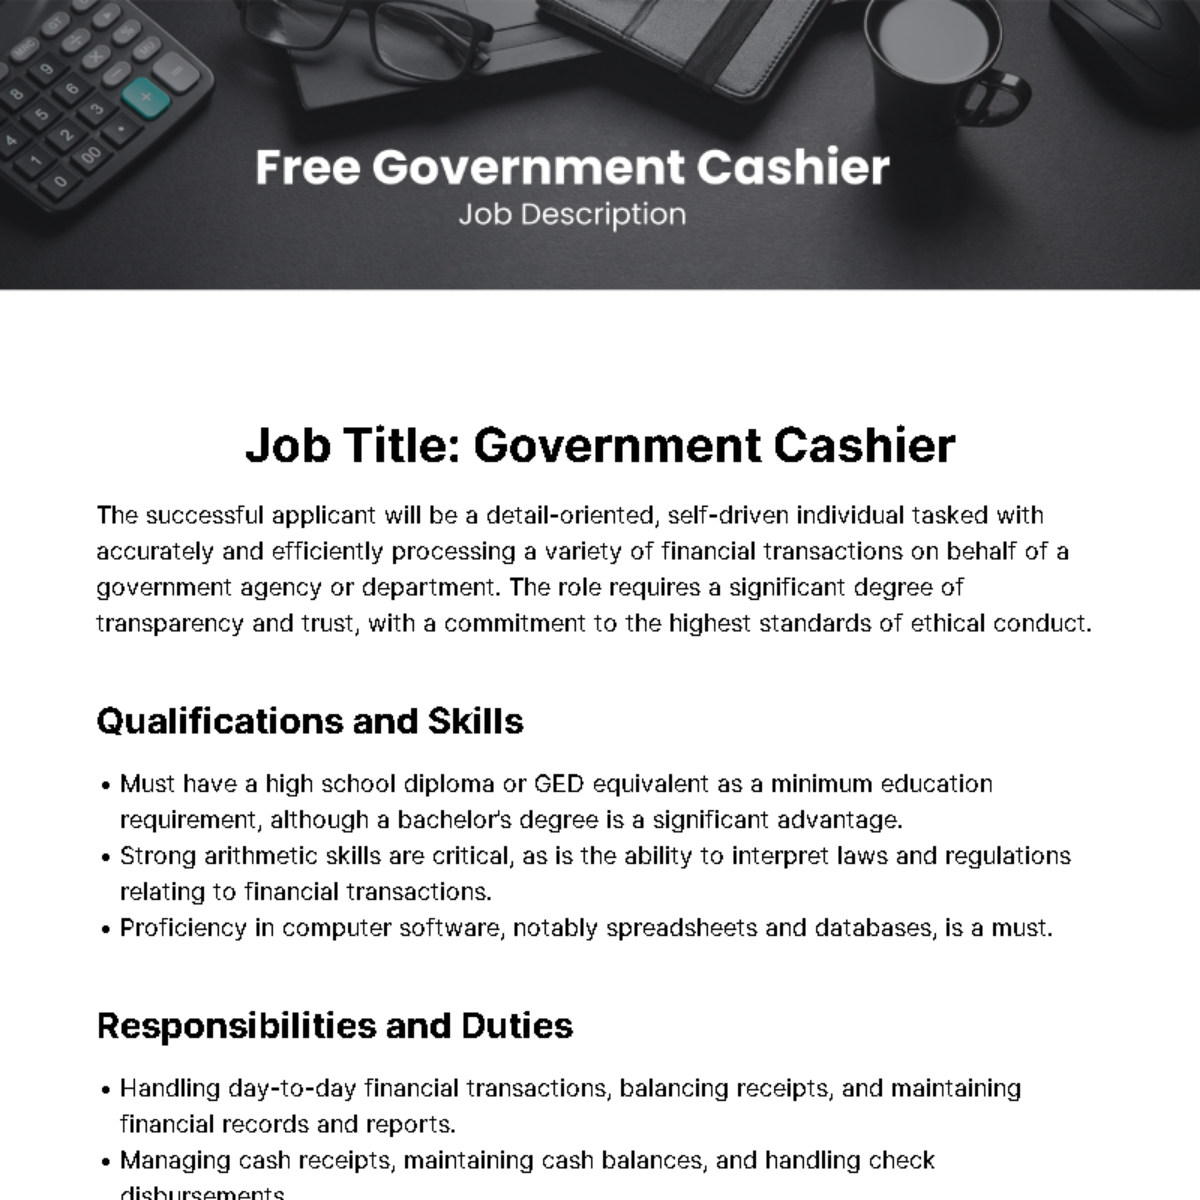 Free Government Cashier Job Description Template